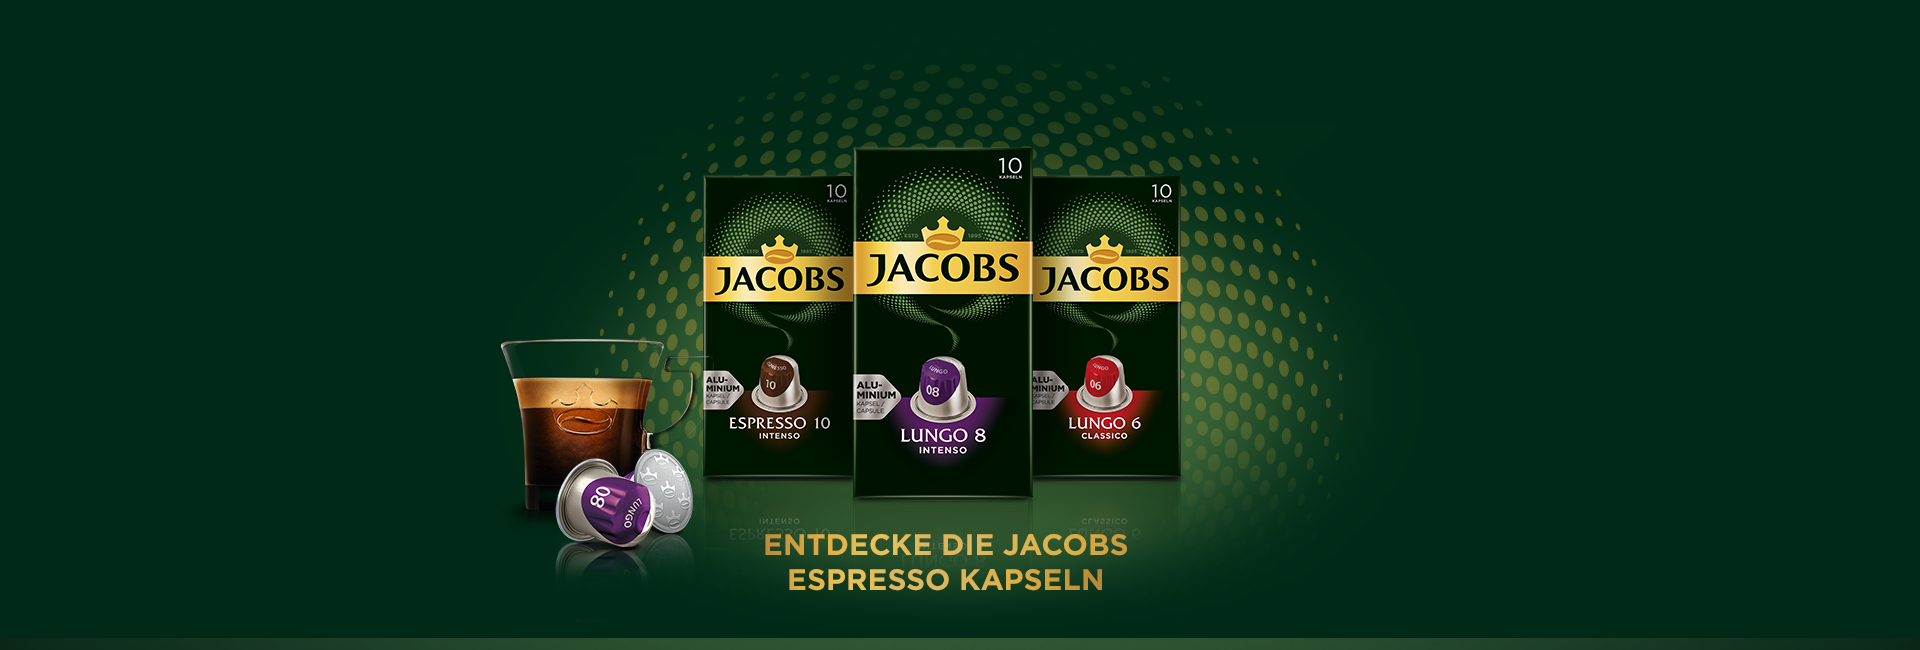 Jacobs_AT_Hero-Image_Kaffeekapseln_Espresso-Kapseln_Desktop (1).png